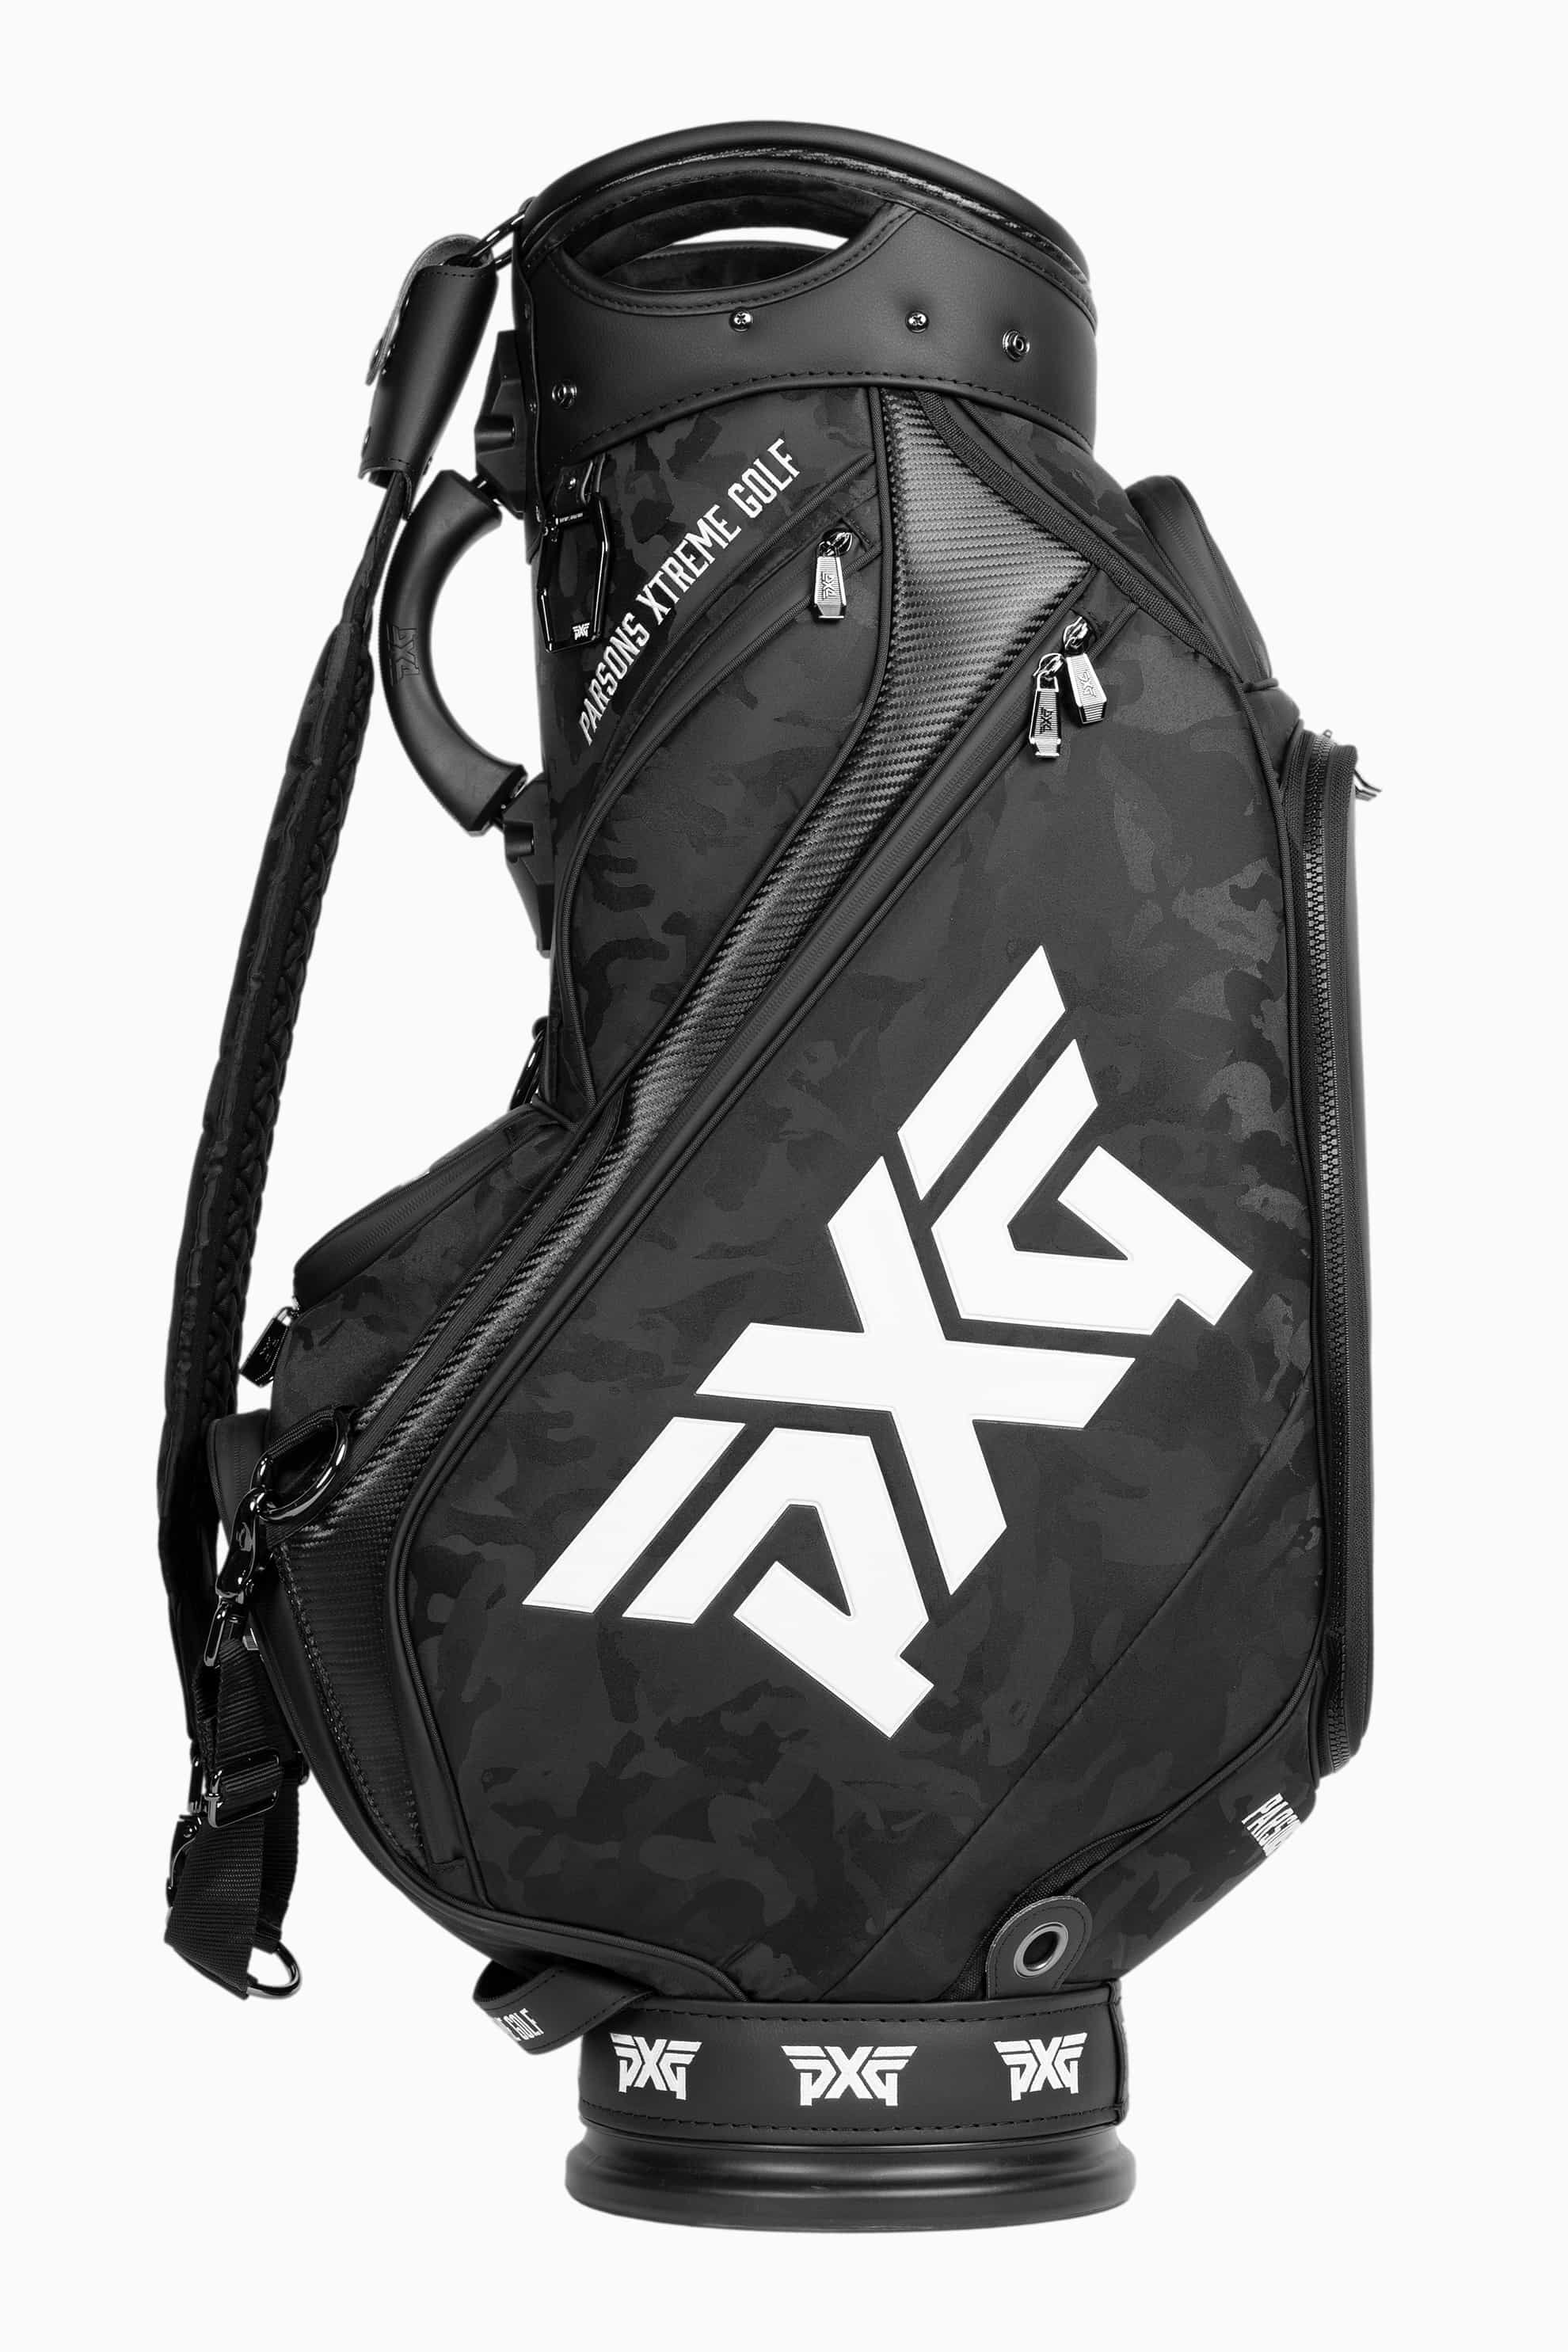 Jacquard Woven Fairway Camo™ Tour Bag | Golf Bags | Standing ...